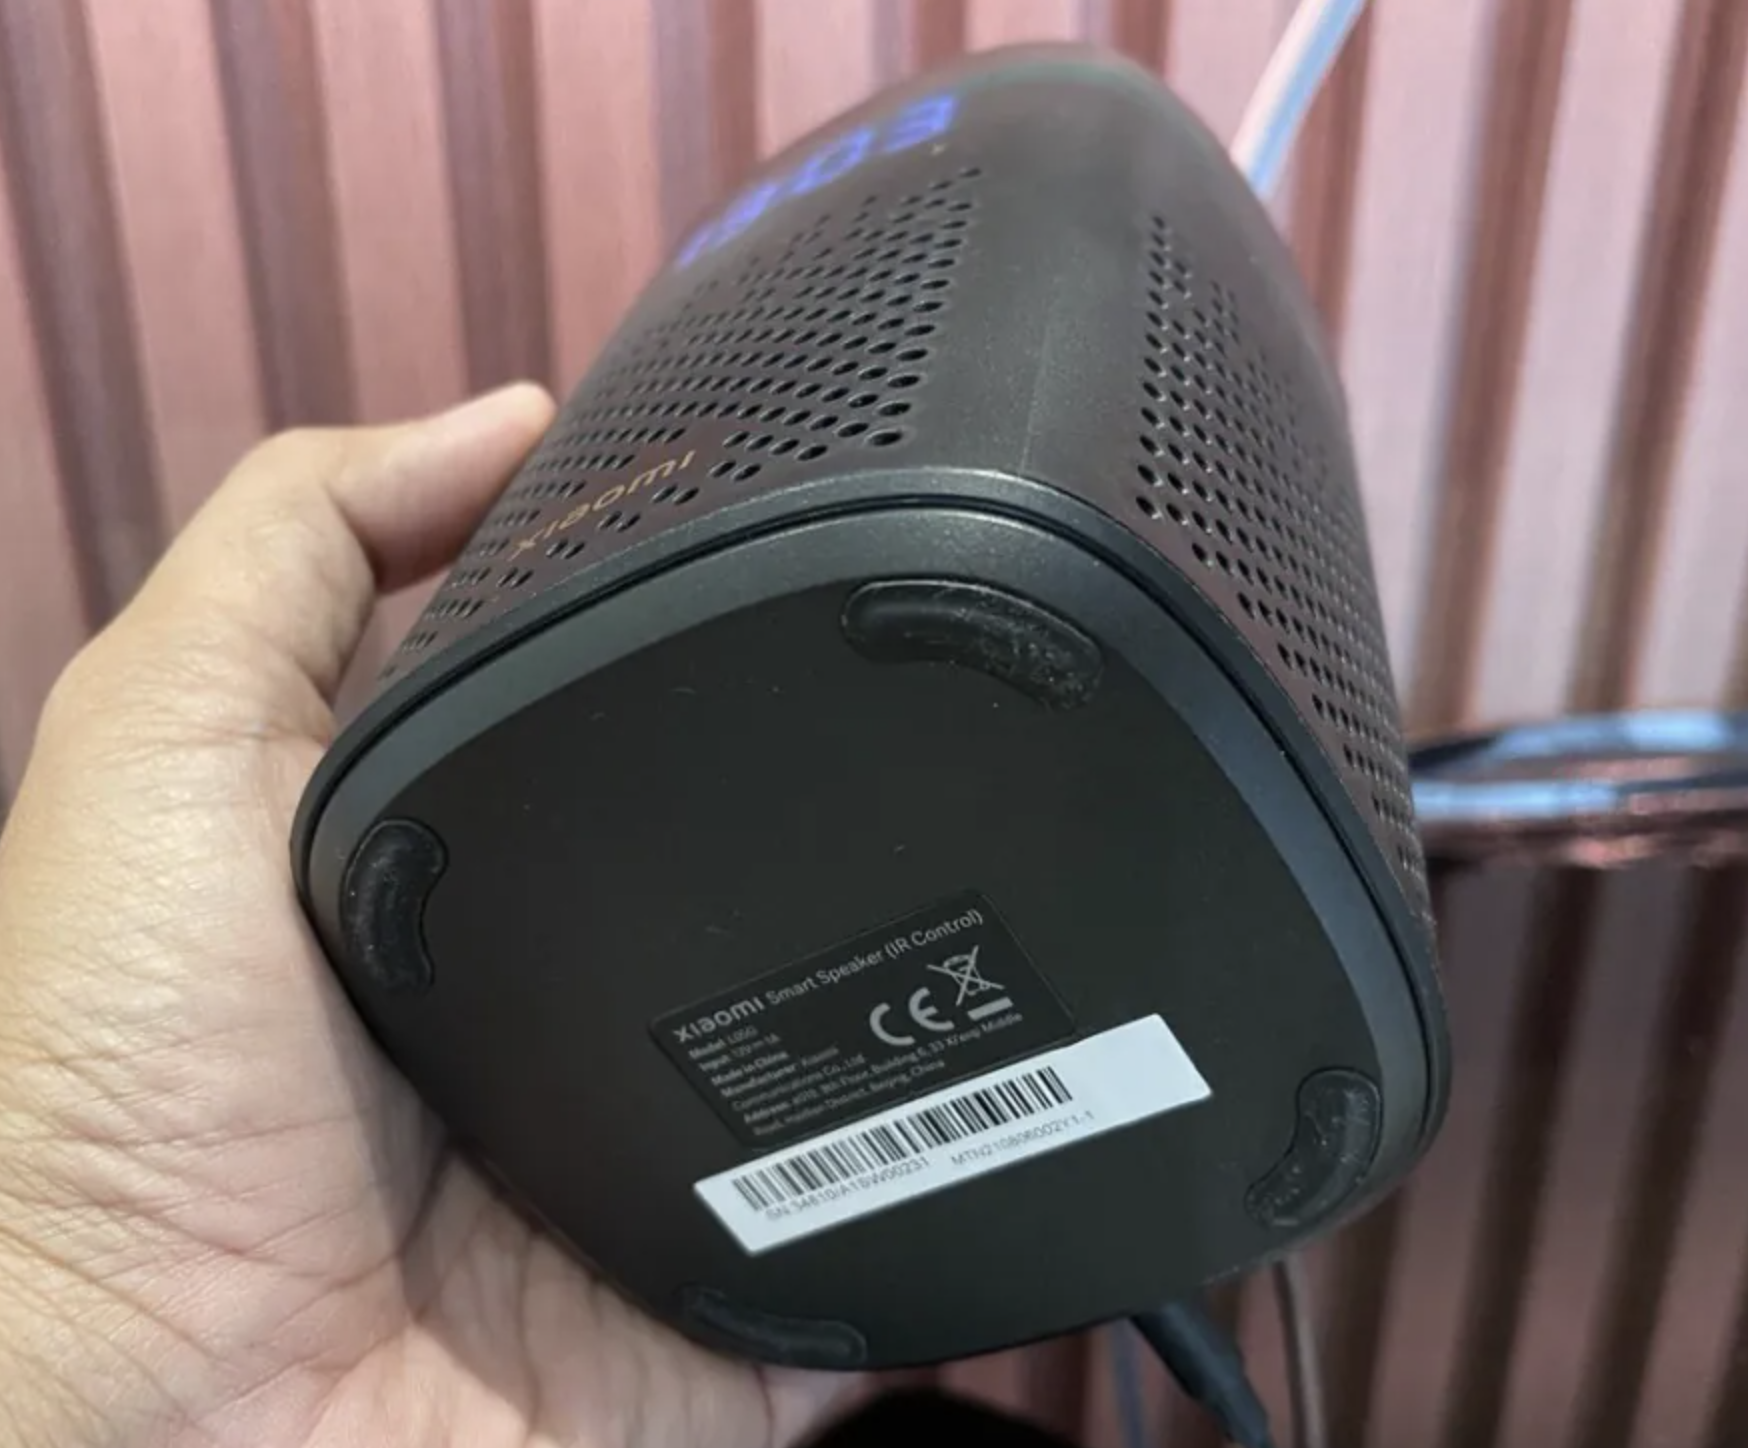 xiaomi smart speaker IR control design